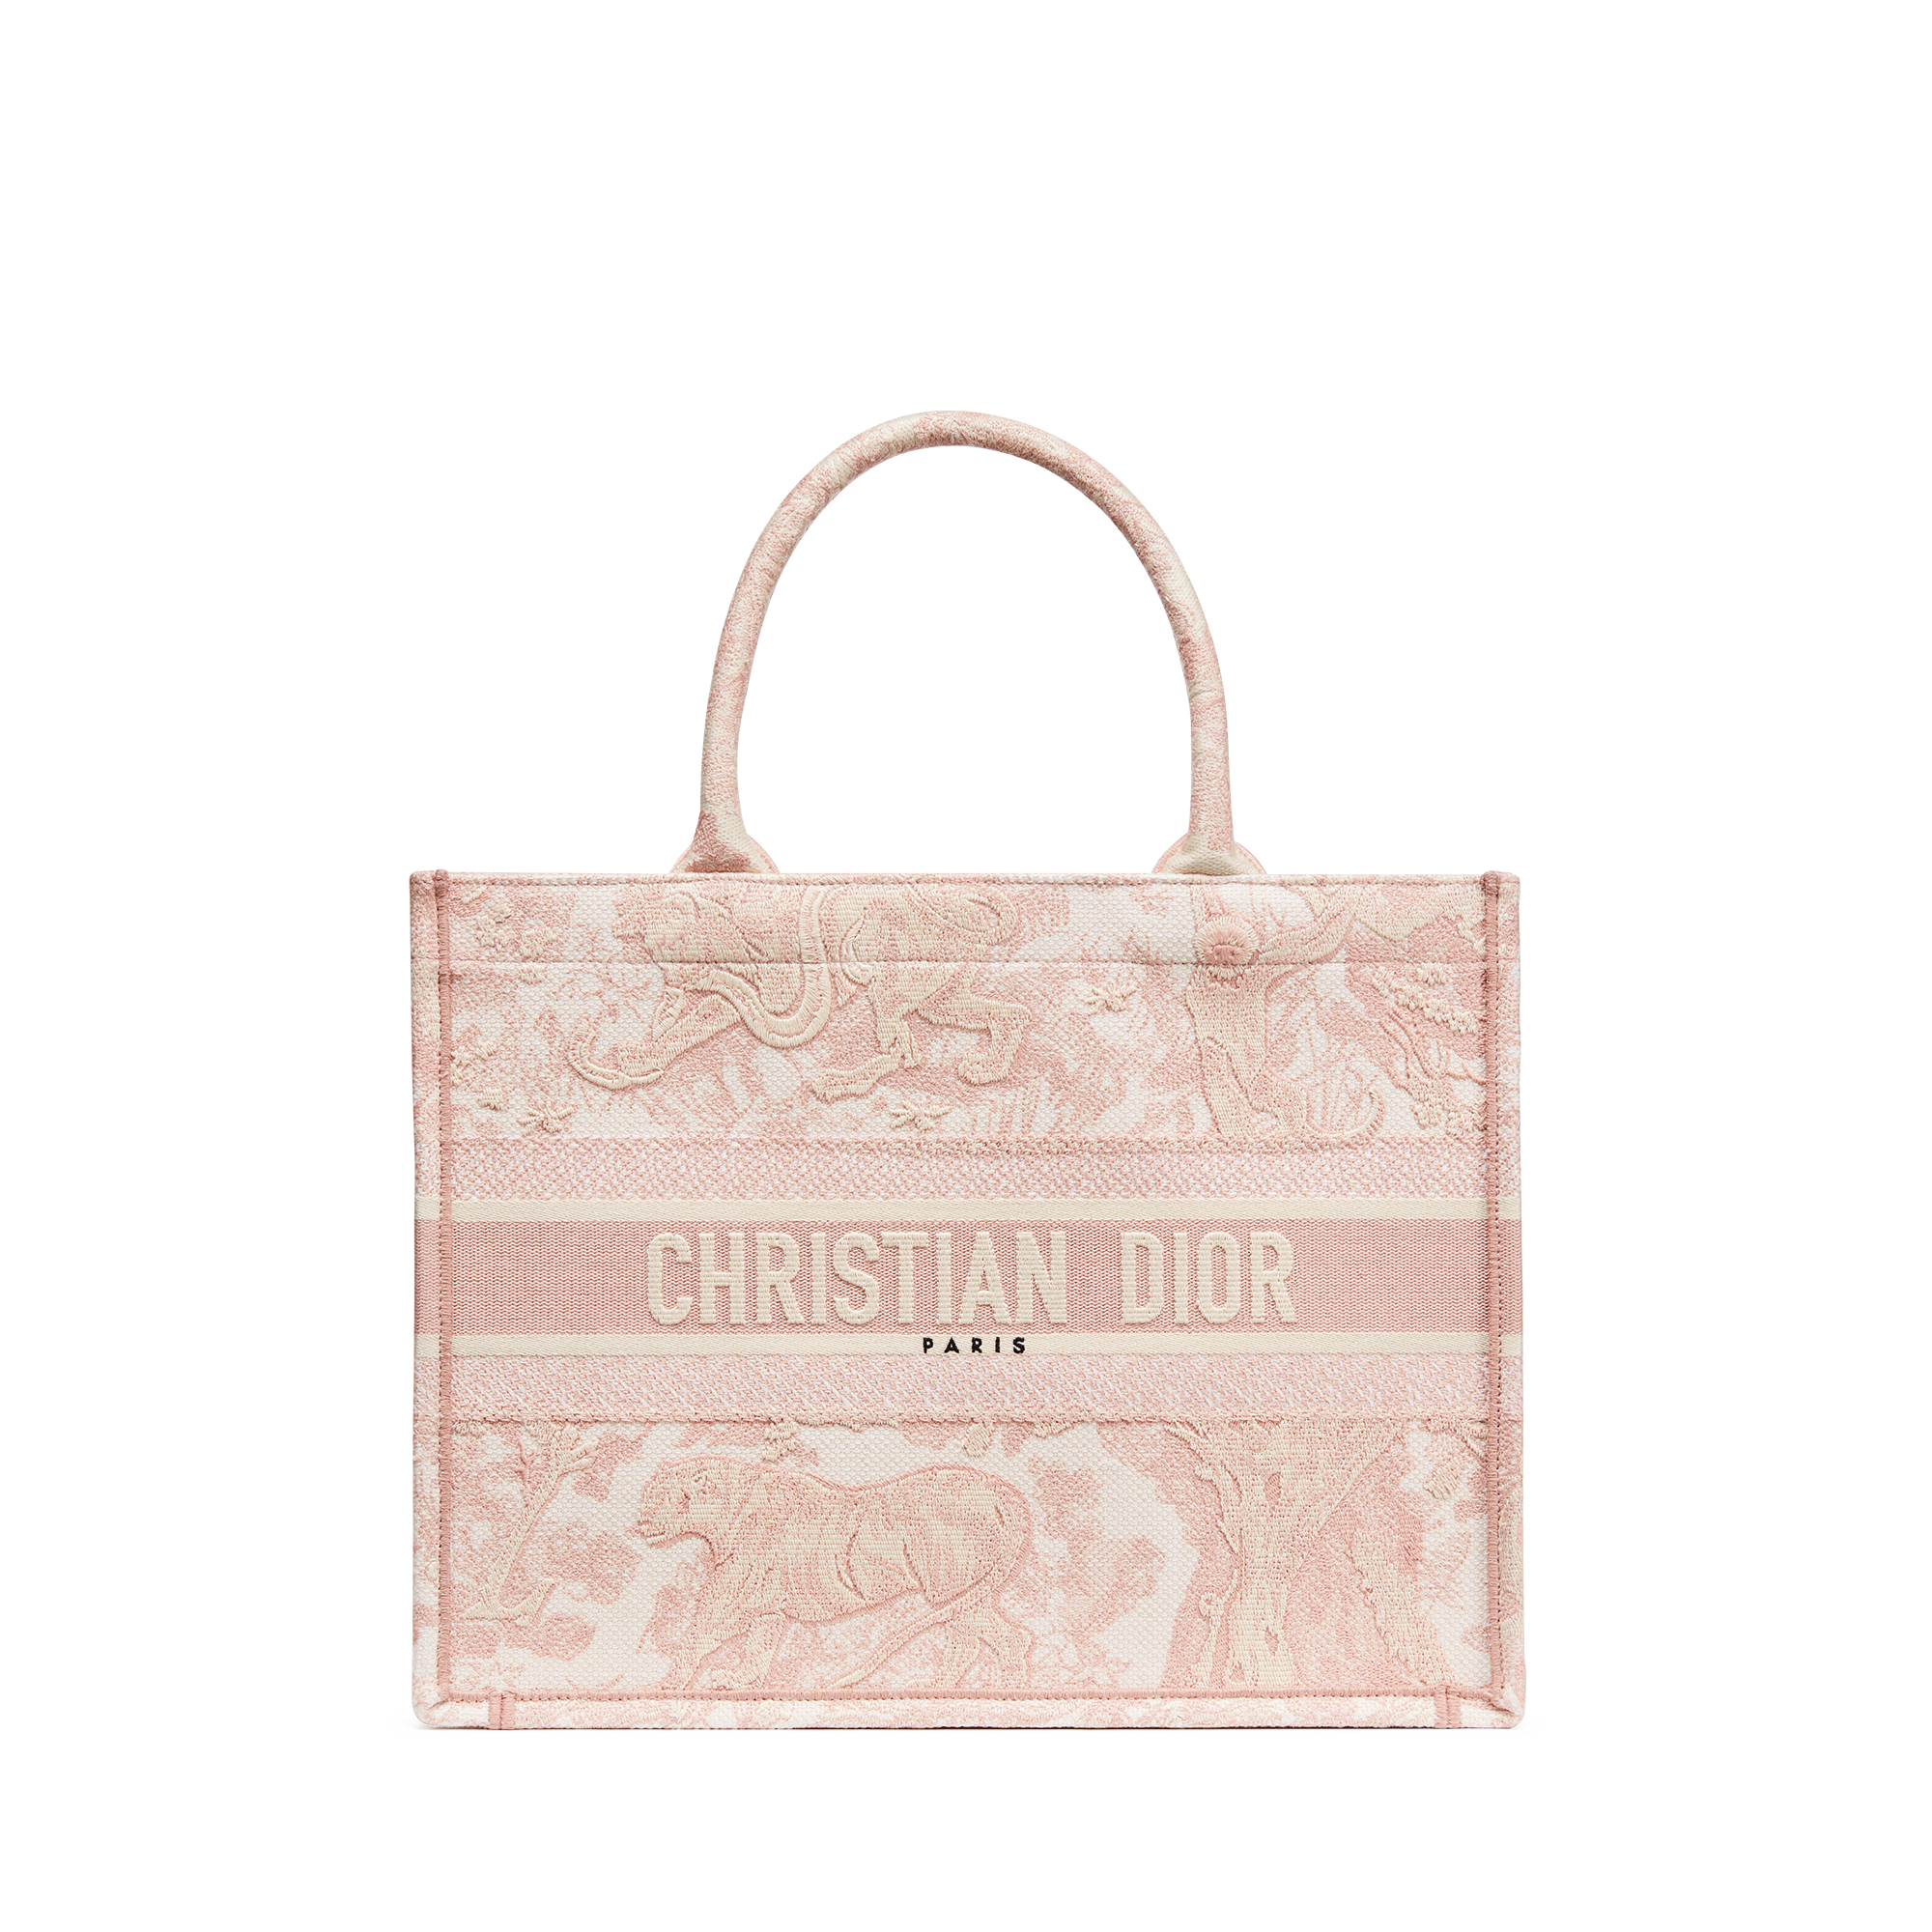 Christian dior small gift box/ pocket dust bag/shopping Bag for Sale